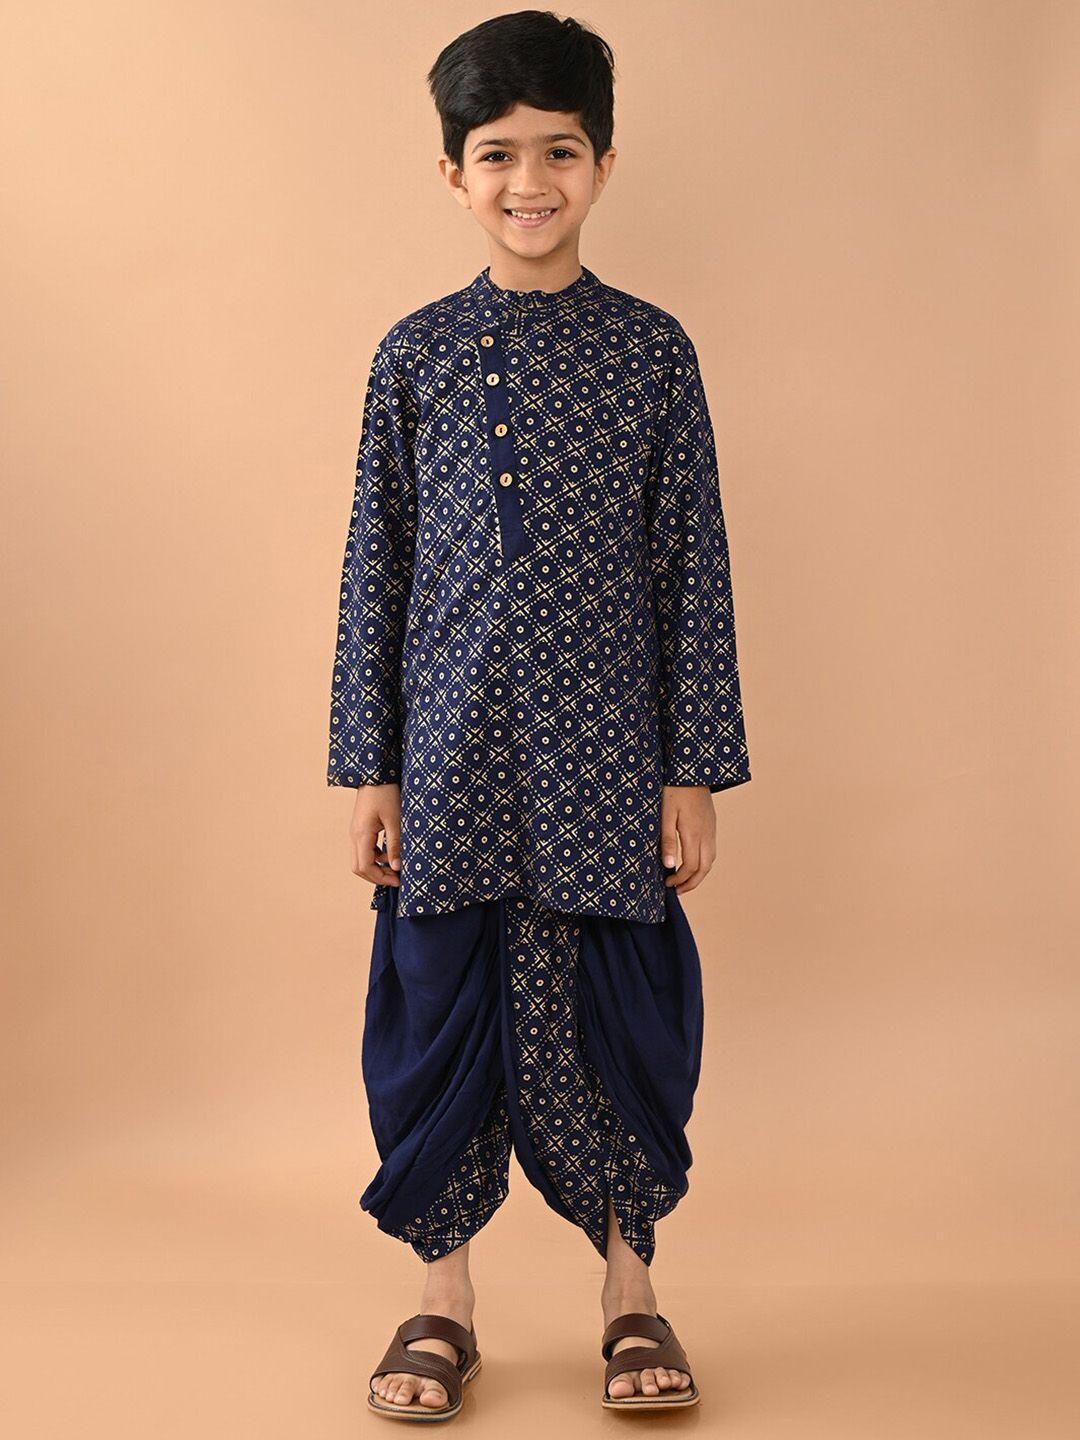 lilpicks boys ethnic motif printed pure cotton kurta with dhoti pants